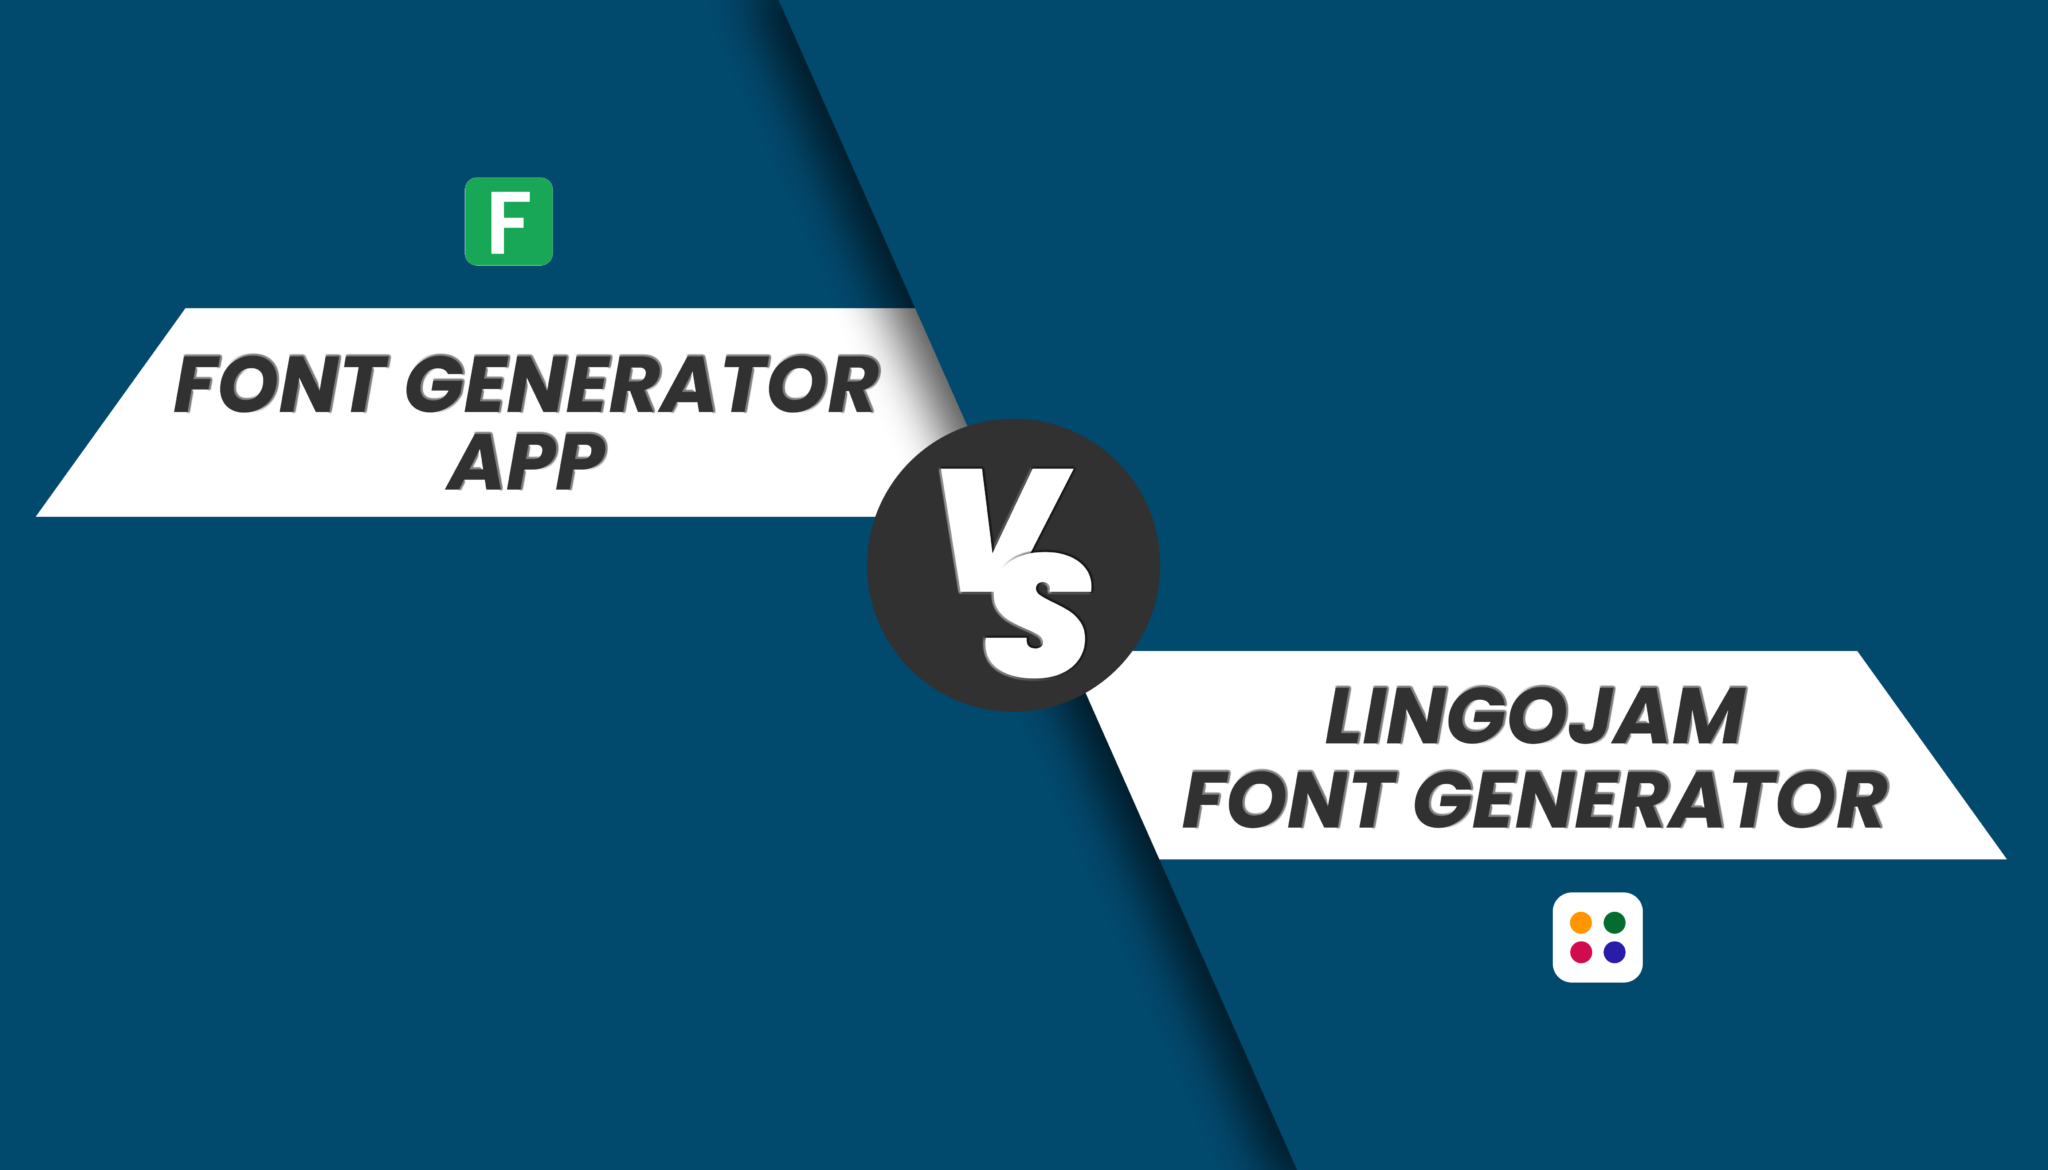 Fontgeneratorapp VS LingoJam Font Generator